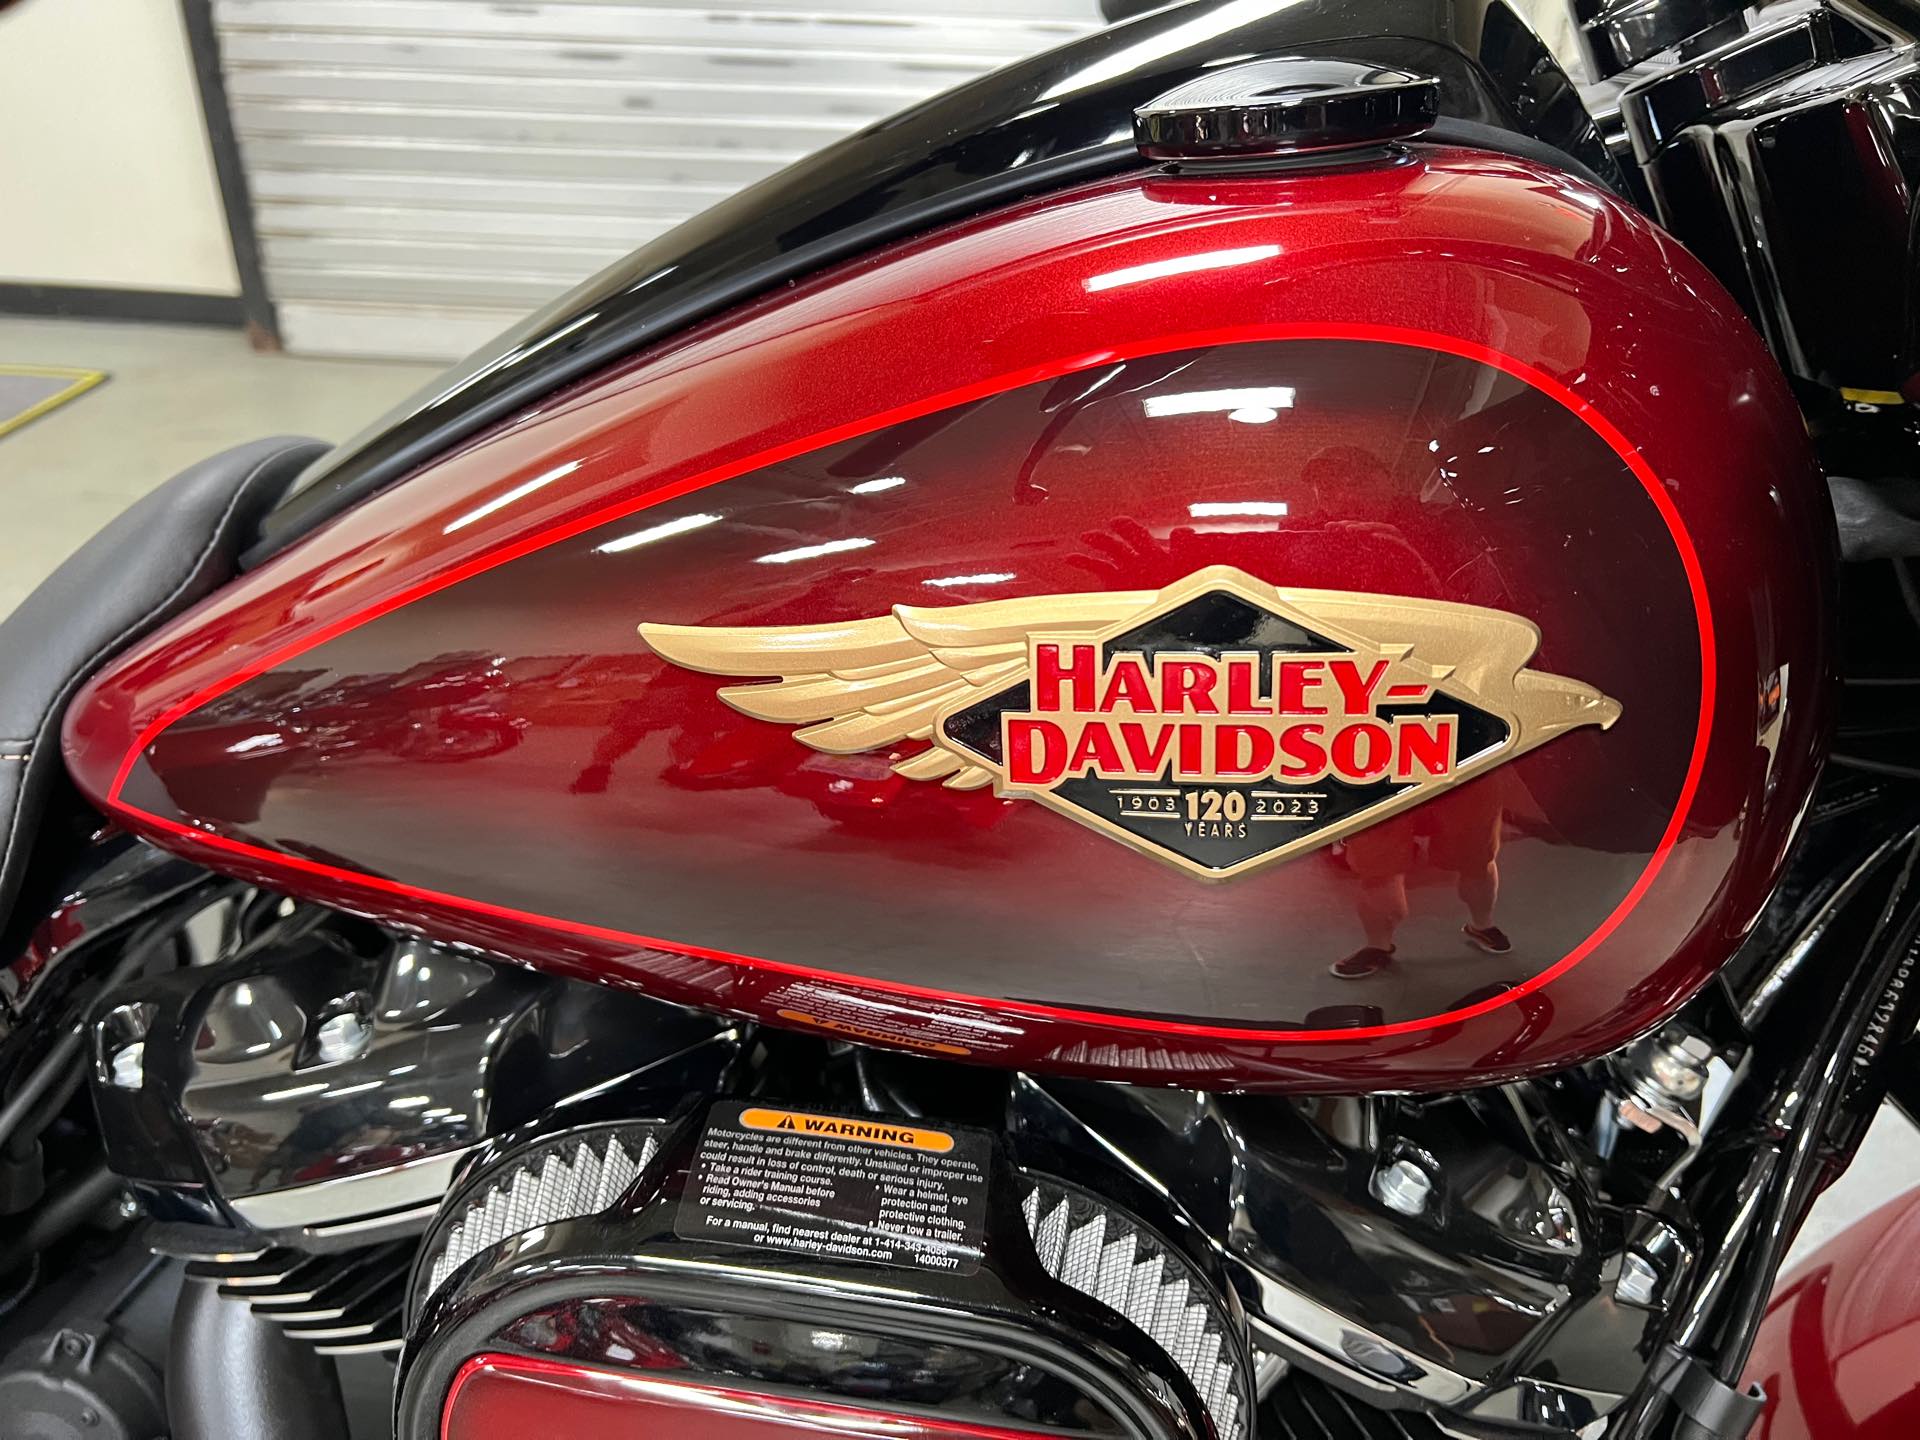 2023 Harley-Davidson Road Glide Special 120th Anniversary Edition Anniversary at Green Mount Road Harley-Davidson